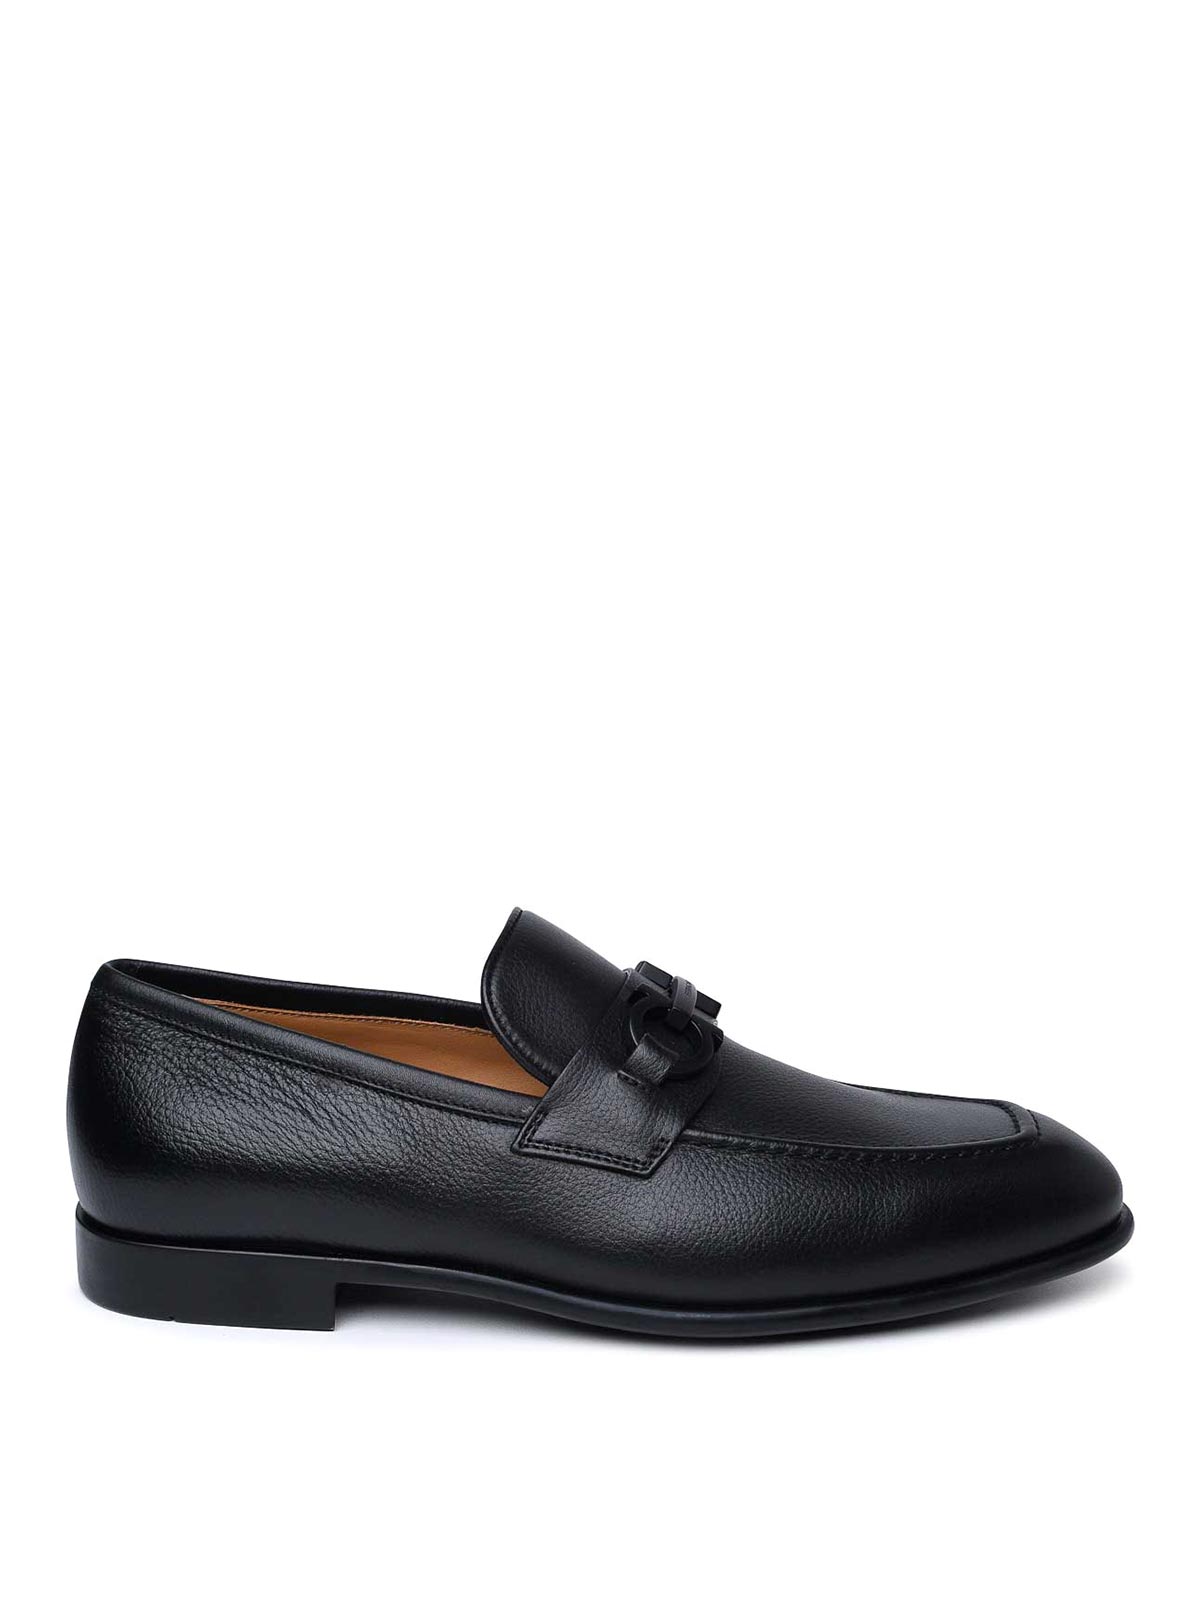 Shop Ferragamo Black Leather Loafers